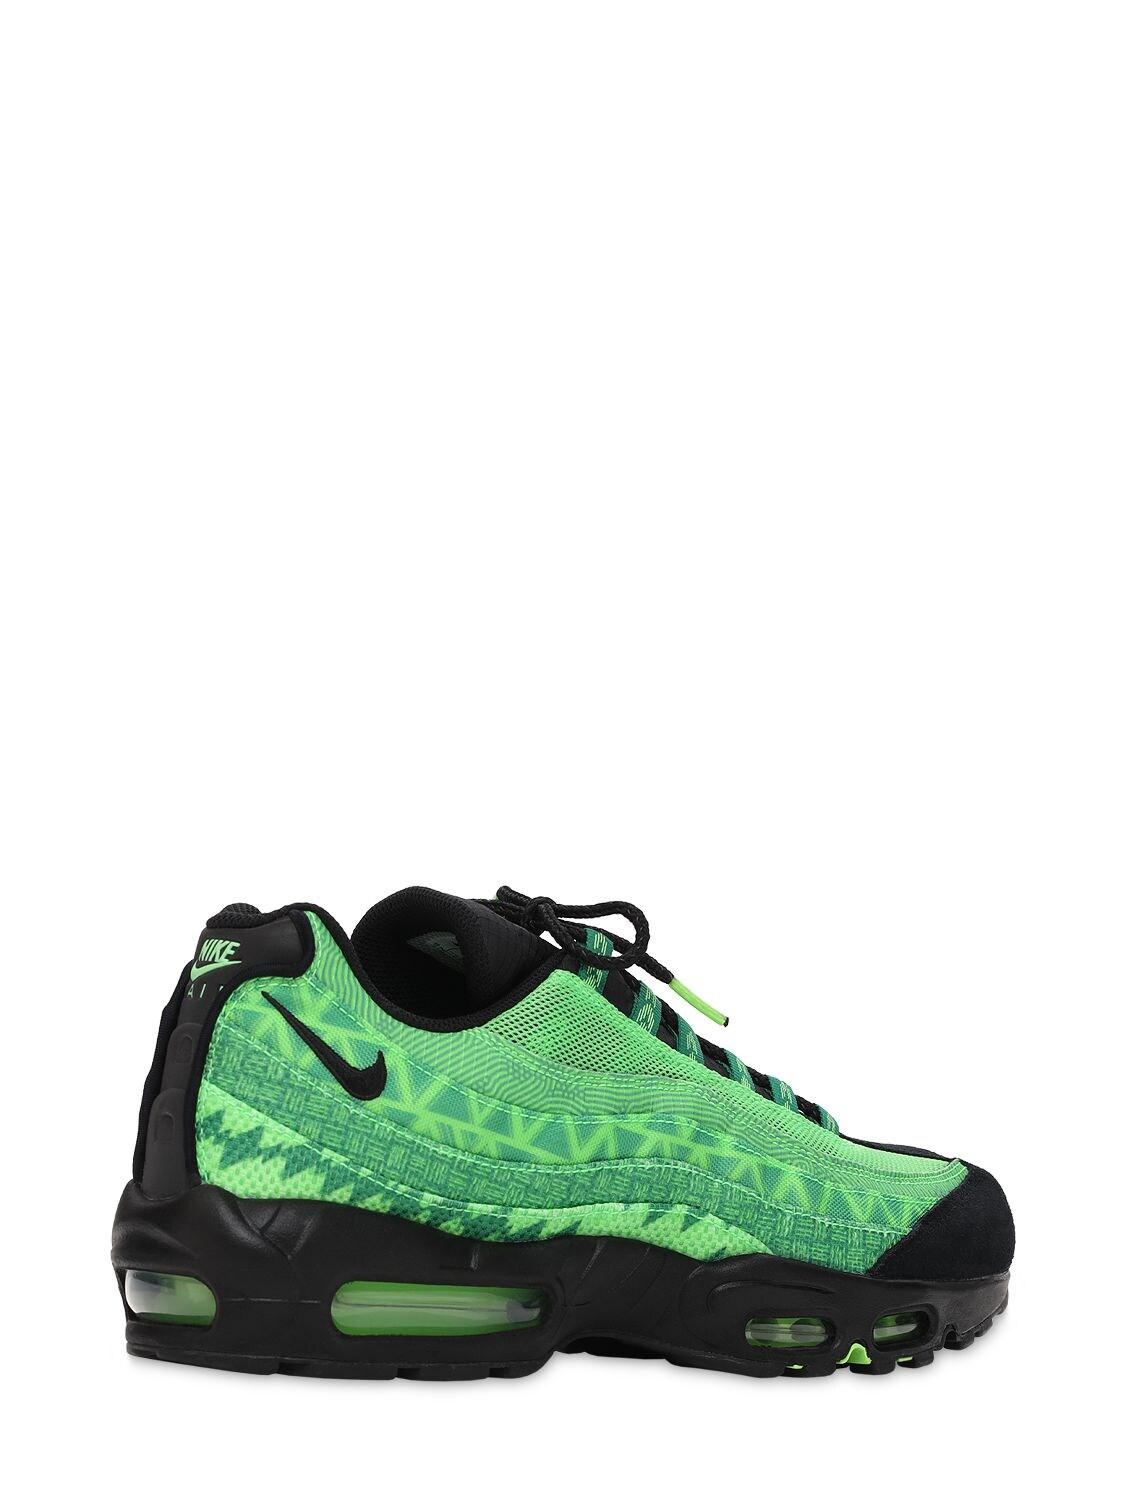 Nike Canvas Air Max 95 Nigeria in Green/Black (Green) for Men - Lyst